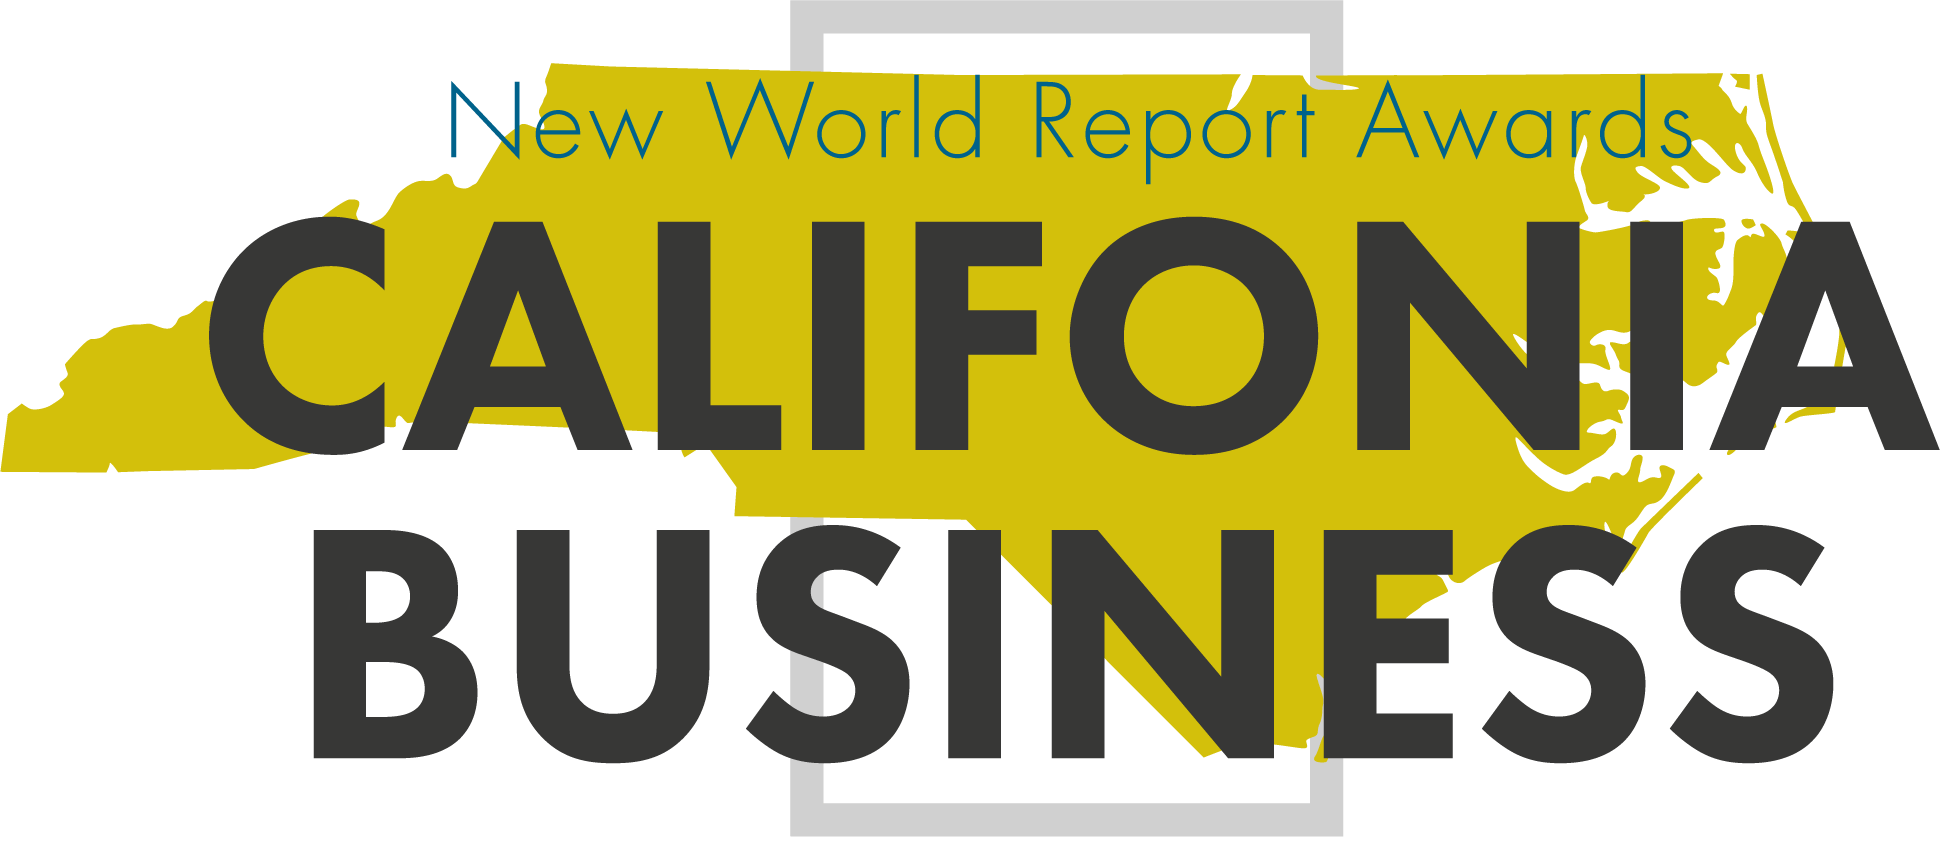 California Business Awards New World Report